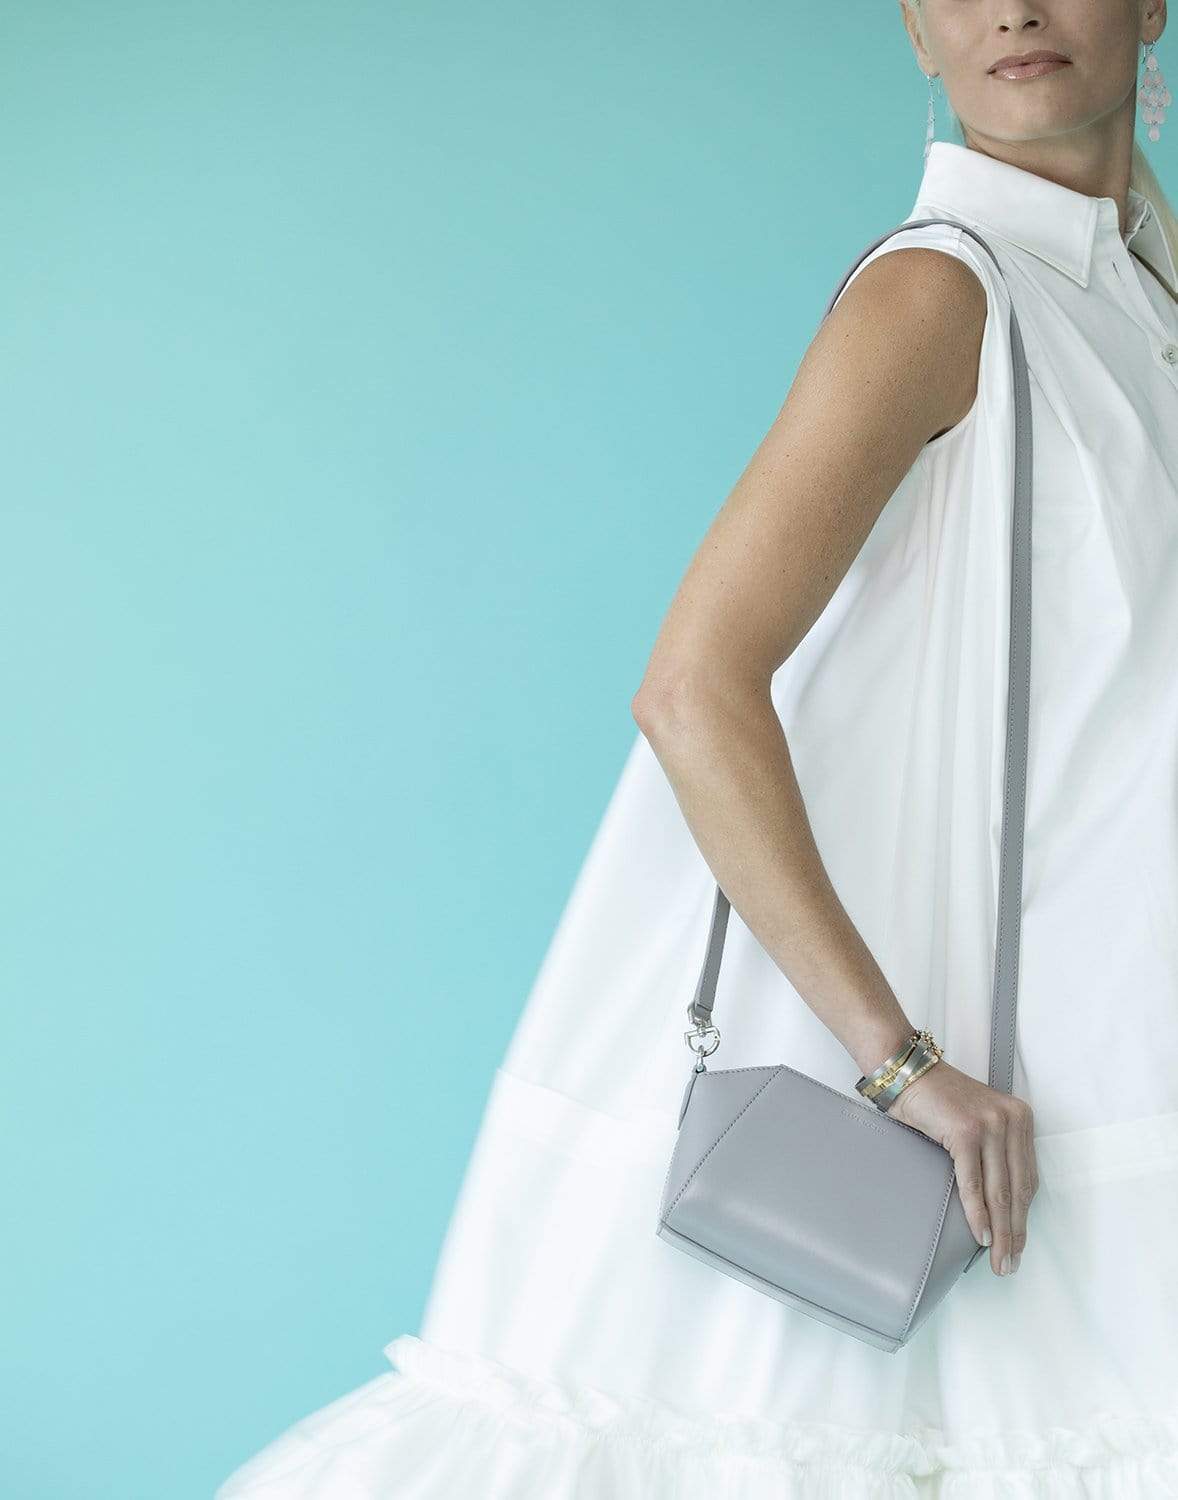 Givenchy Nano Antigona - What Fits, Pros/Cons, 3 Ways to Wear It